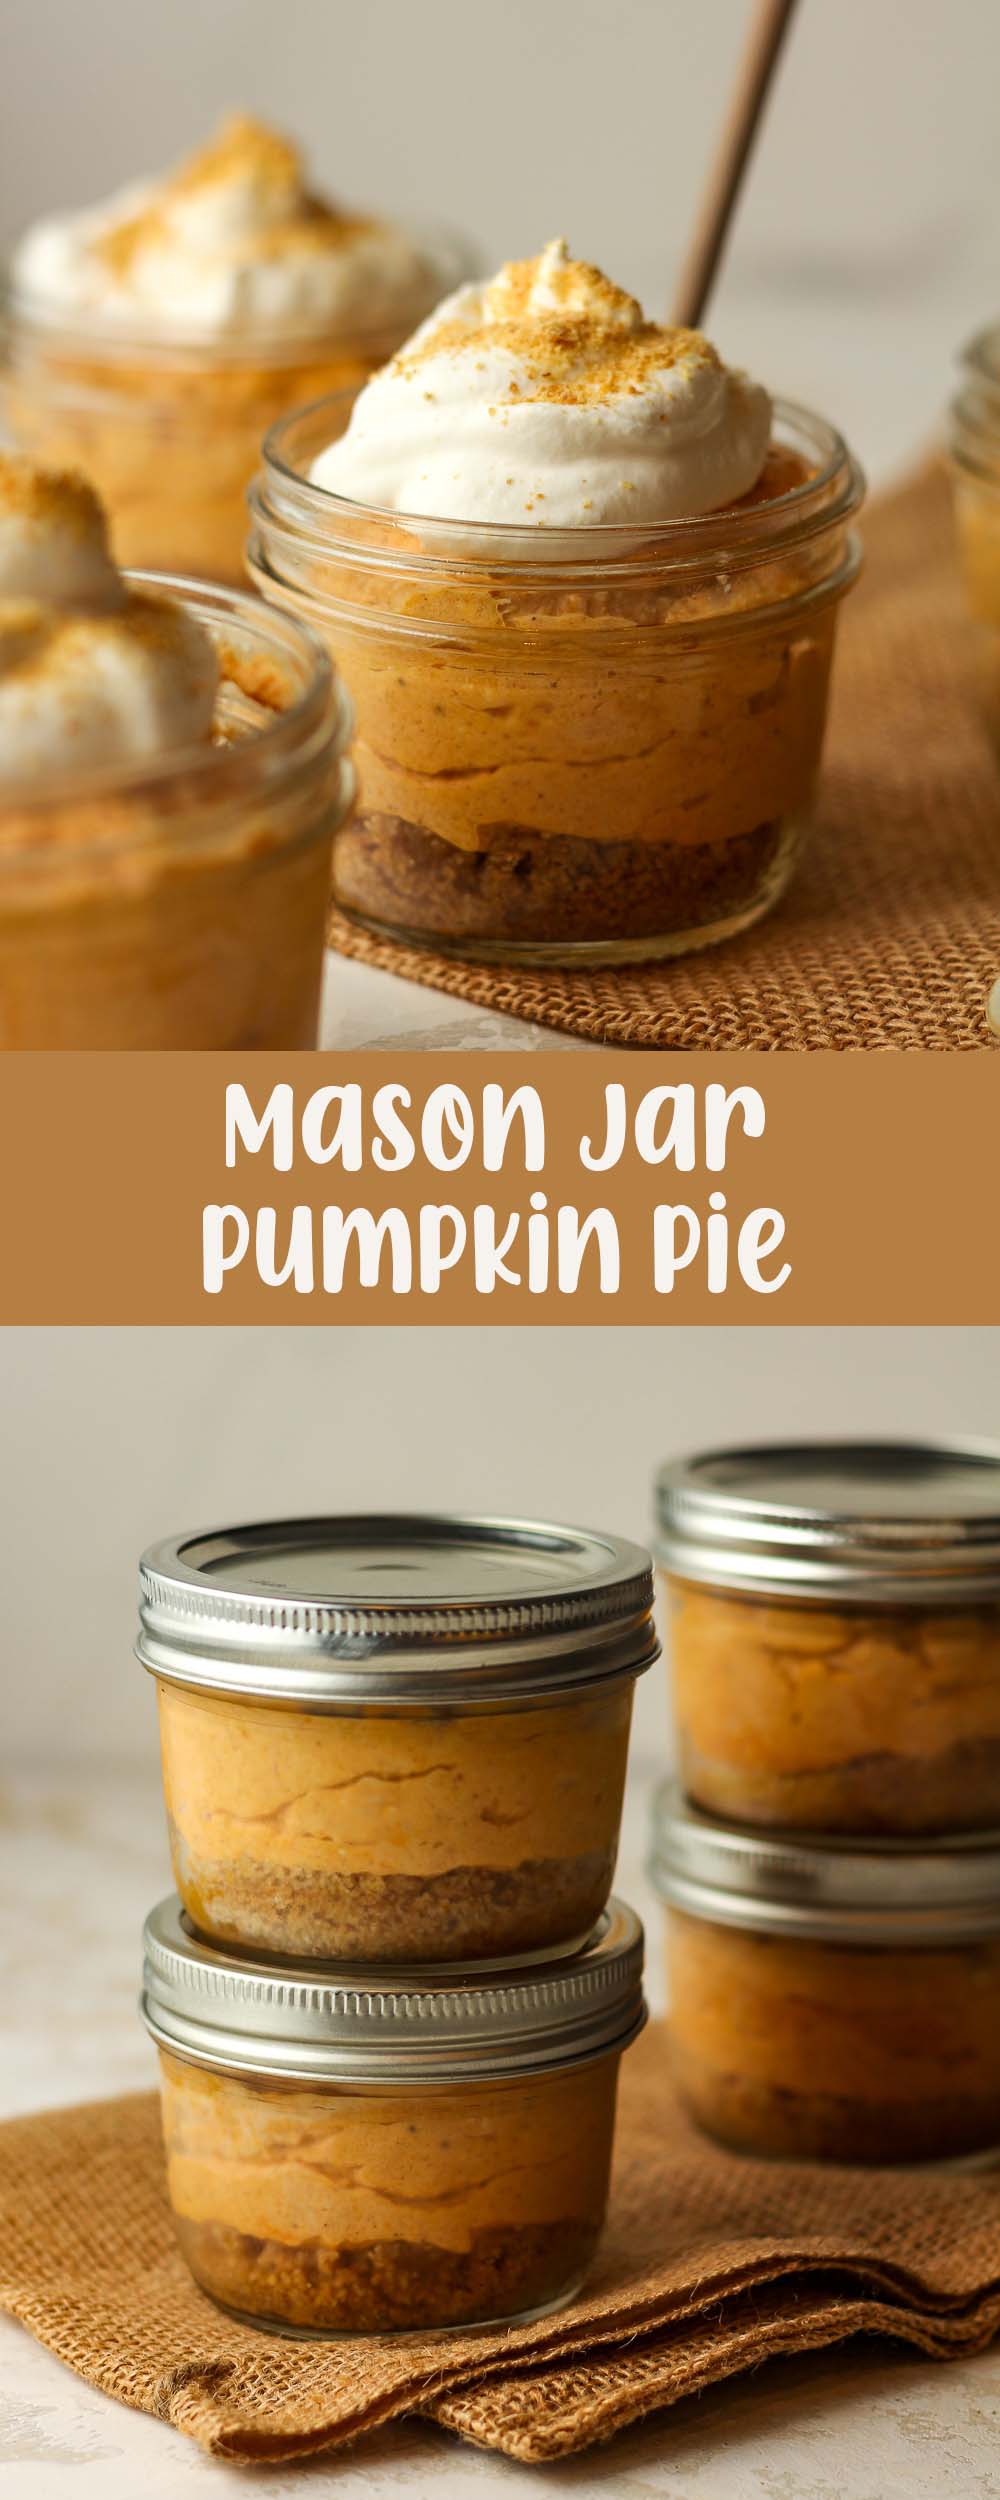 Two photos of Mason Jar Pumpkin Pie